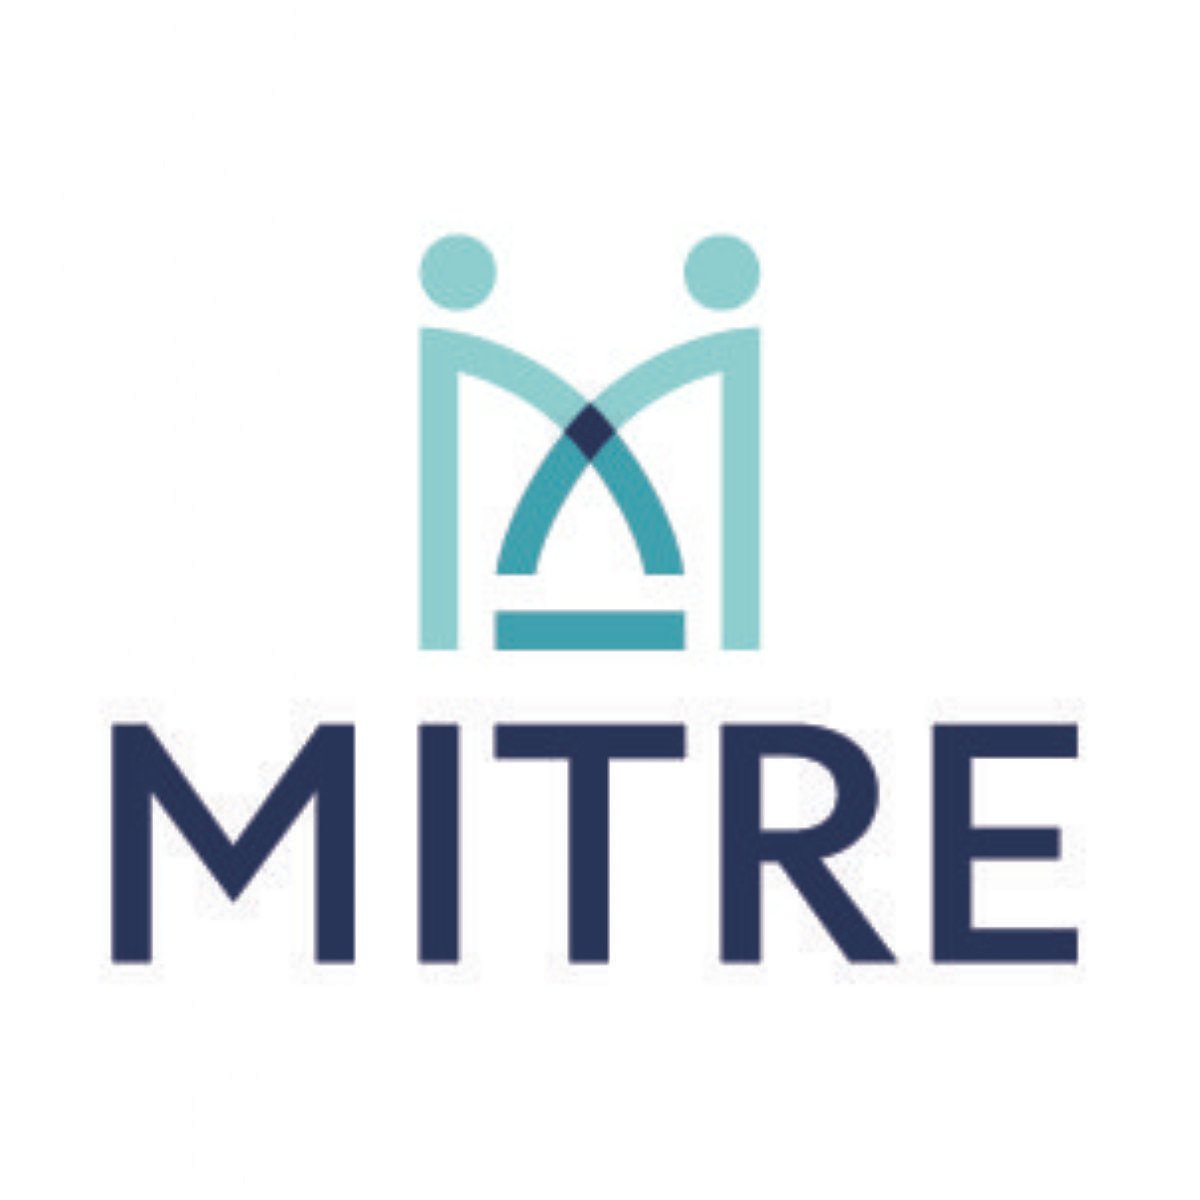 Mitre Logo - The Minster School - Minster School Academy Conversion